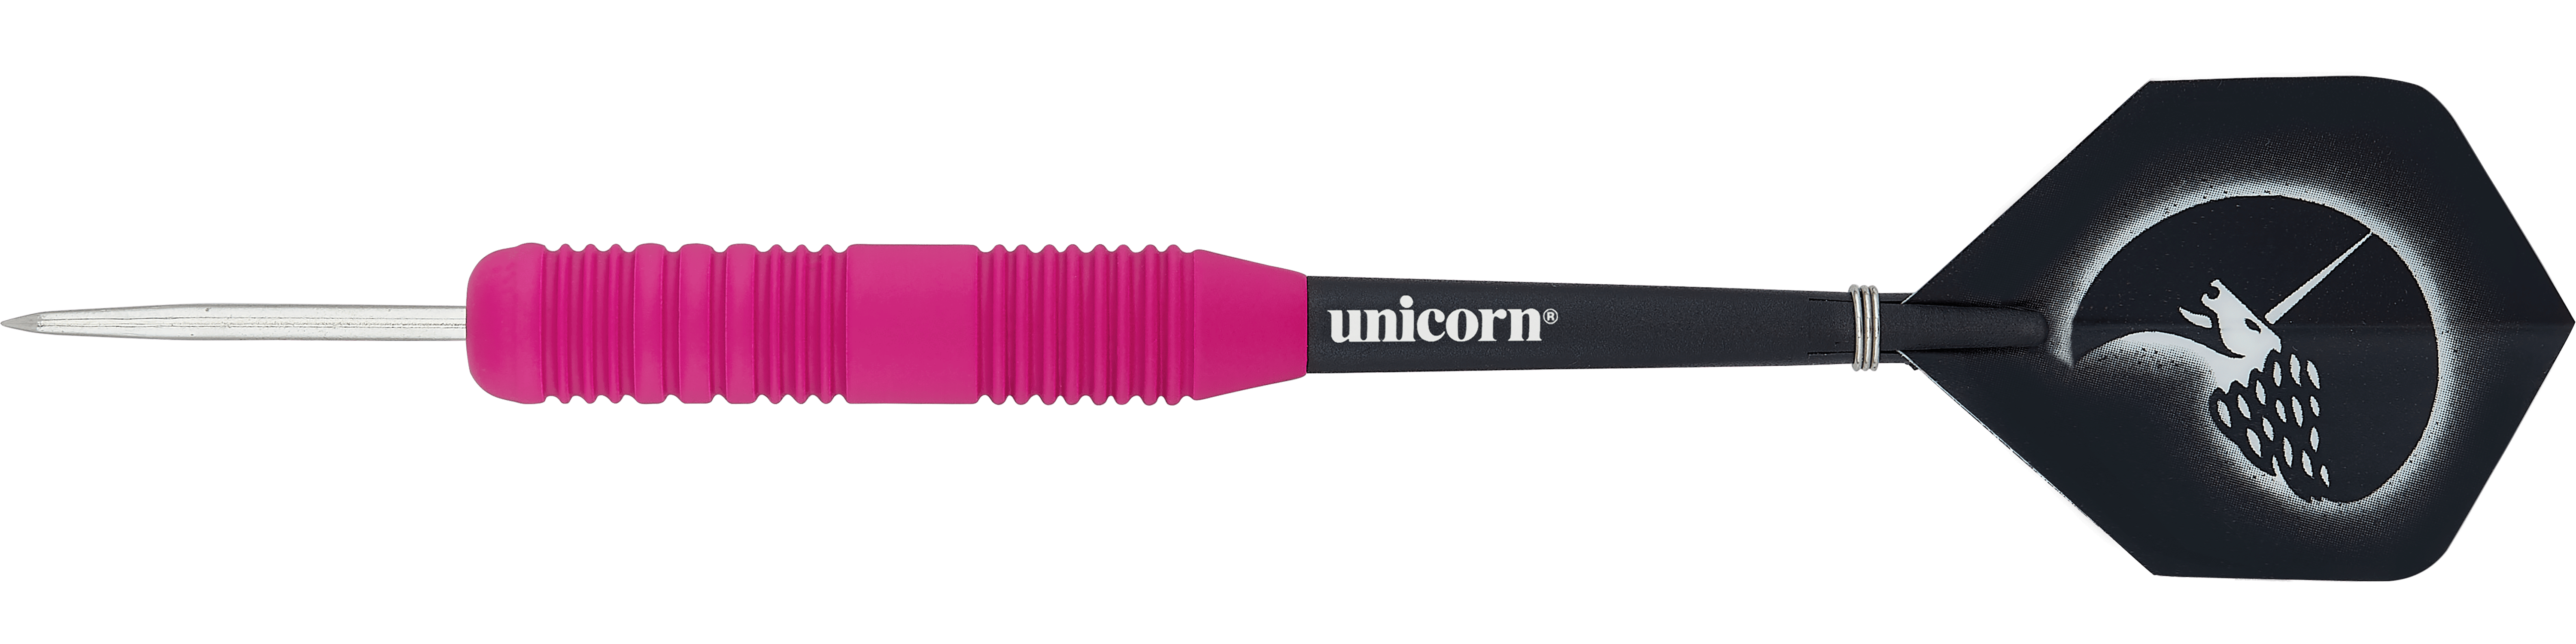 Unicorn Core Plus Rubberised Pink Steeldarts